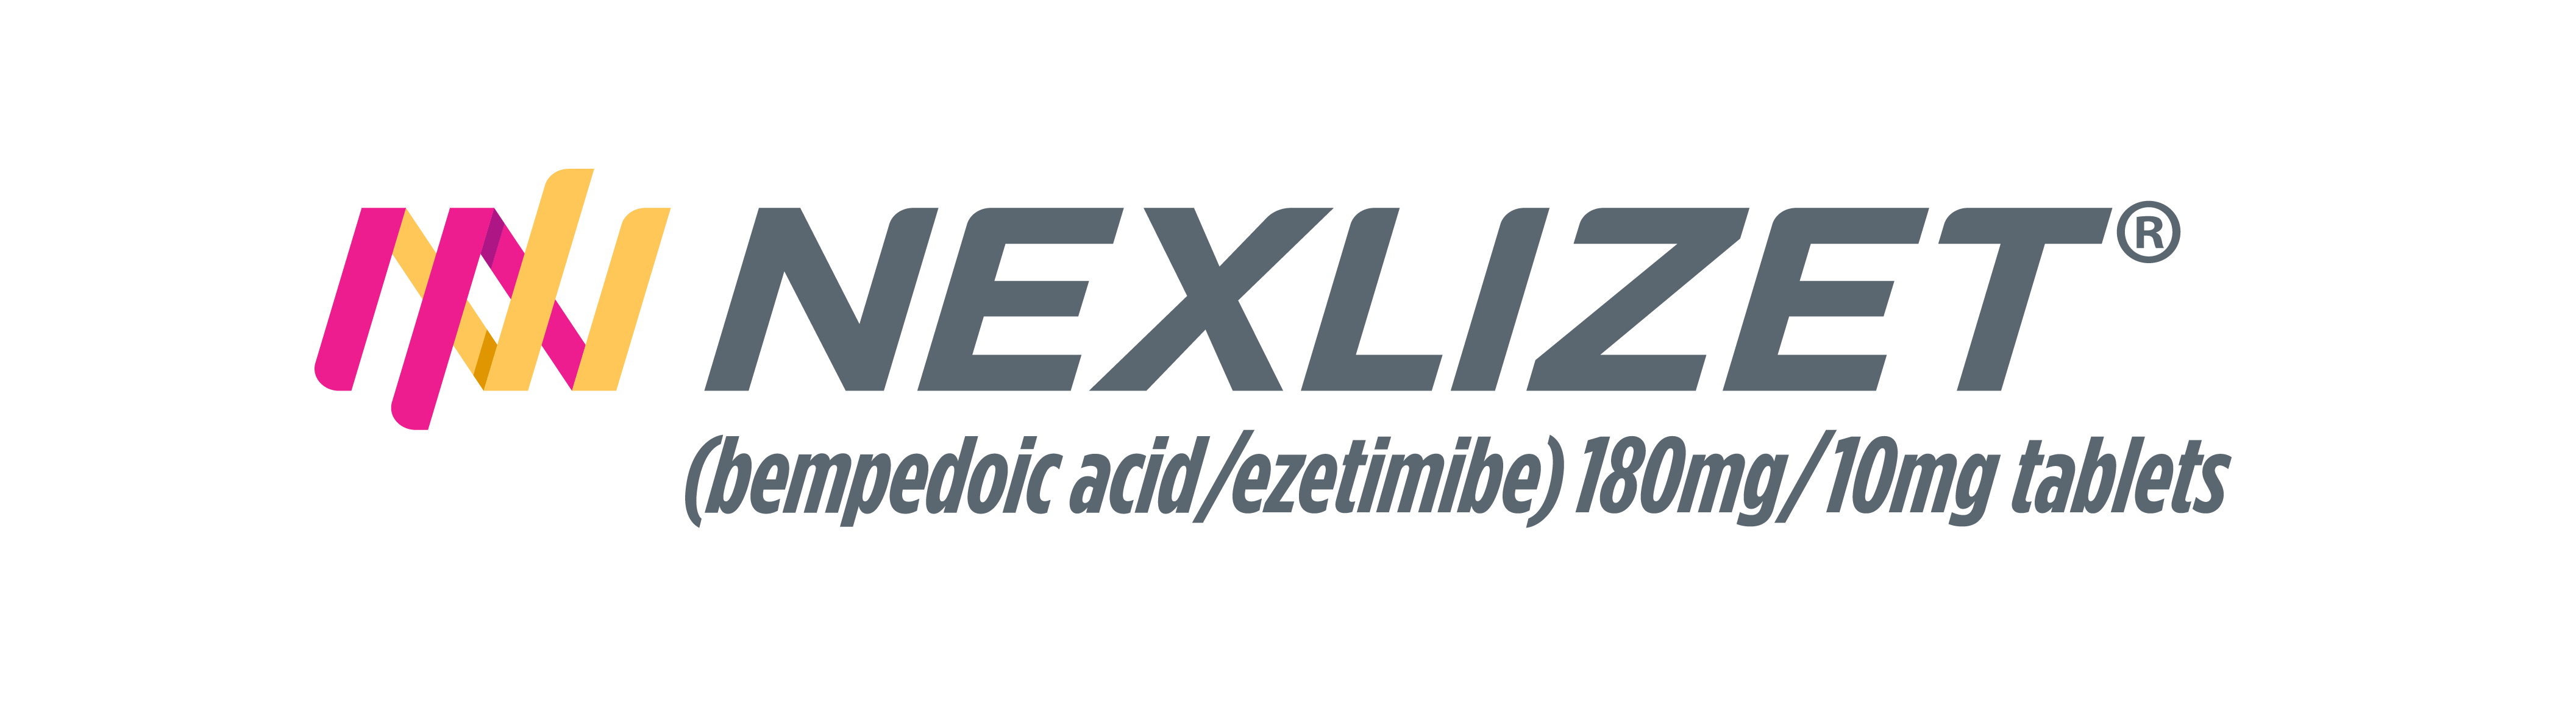 NEXLIZET® (bempedoic acid and ezetimibe) tablets